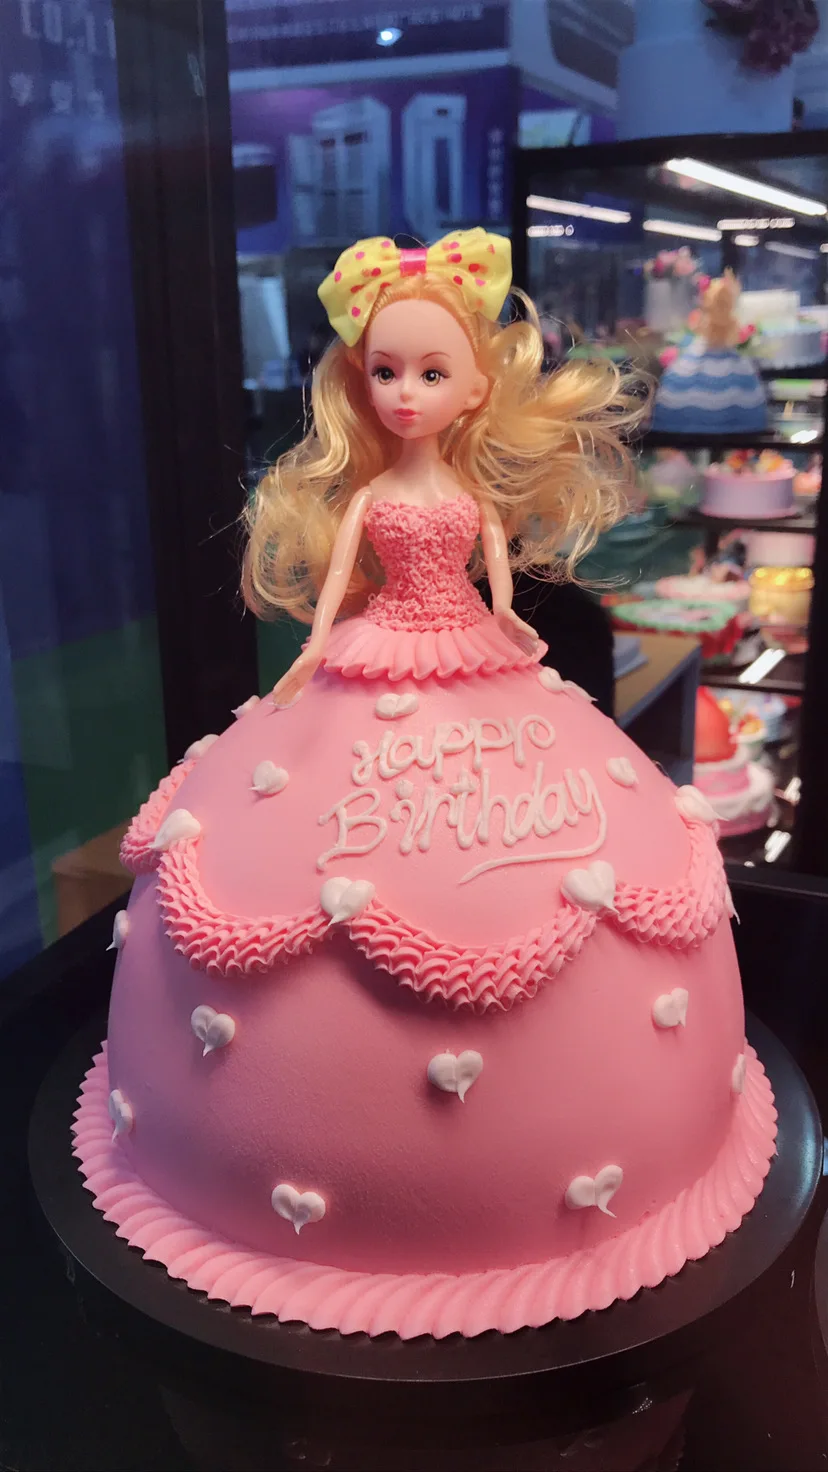 How To Make Two Tire Cake| Barbie Doll Cake Design |Fondant Flowers  Decorating Cake ideas - YouTube | Doll cake designs, Barbie doll cakes,  Doll cake